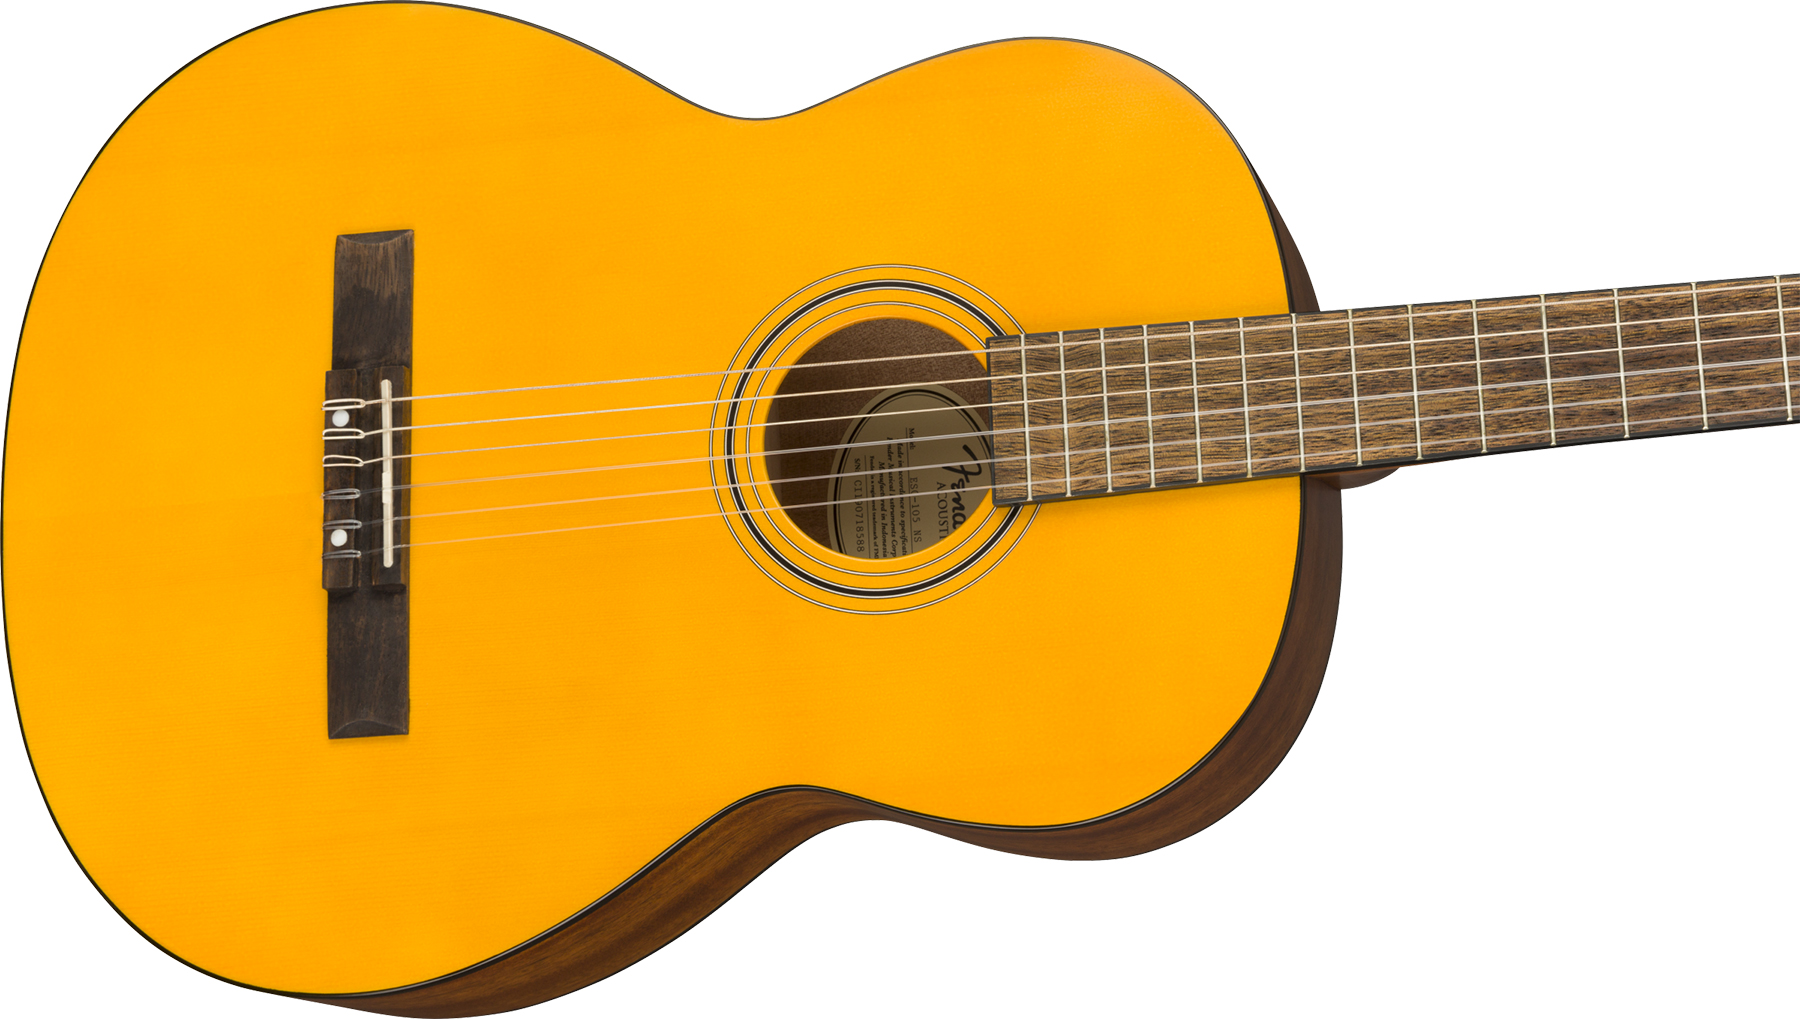 Fender Esc-105 Classical Educational Tout Okoume Noy - Vintage Natural Satin - Classical guitar 4/4 size - Variation 2